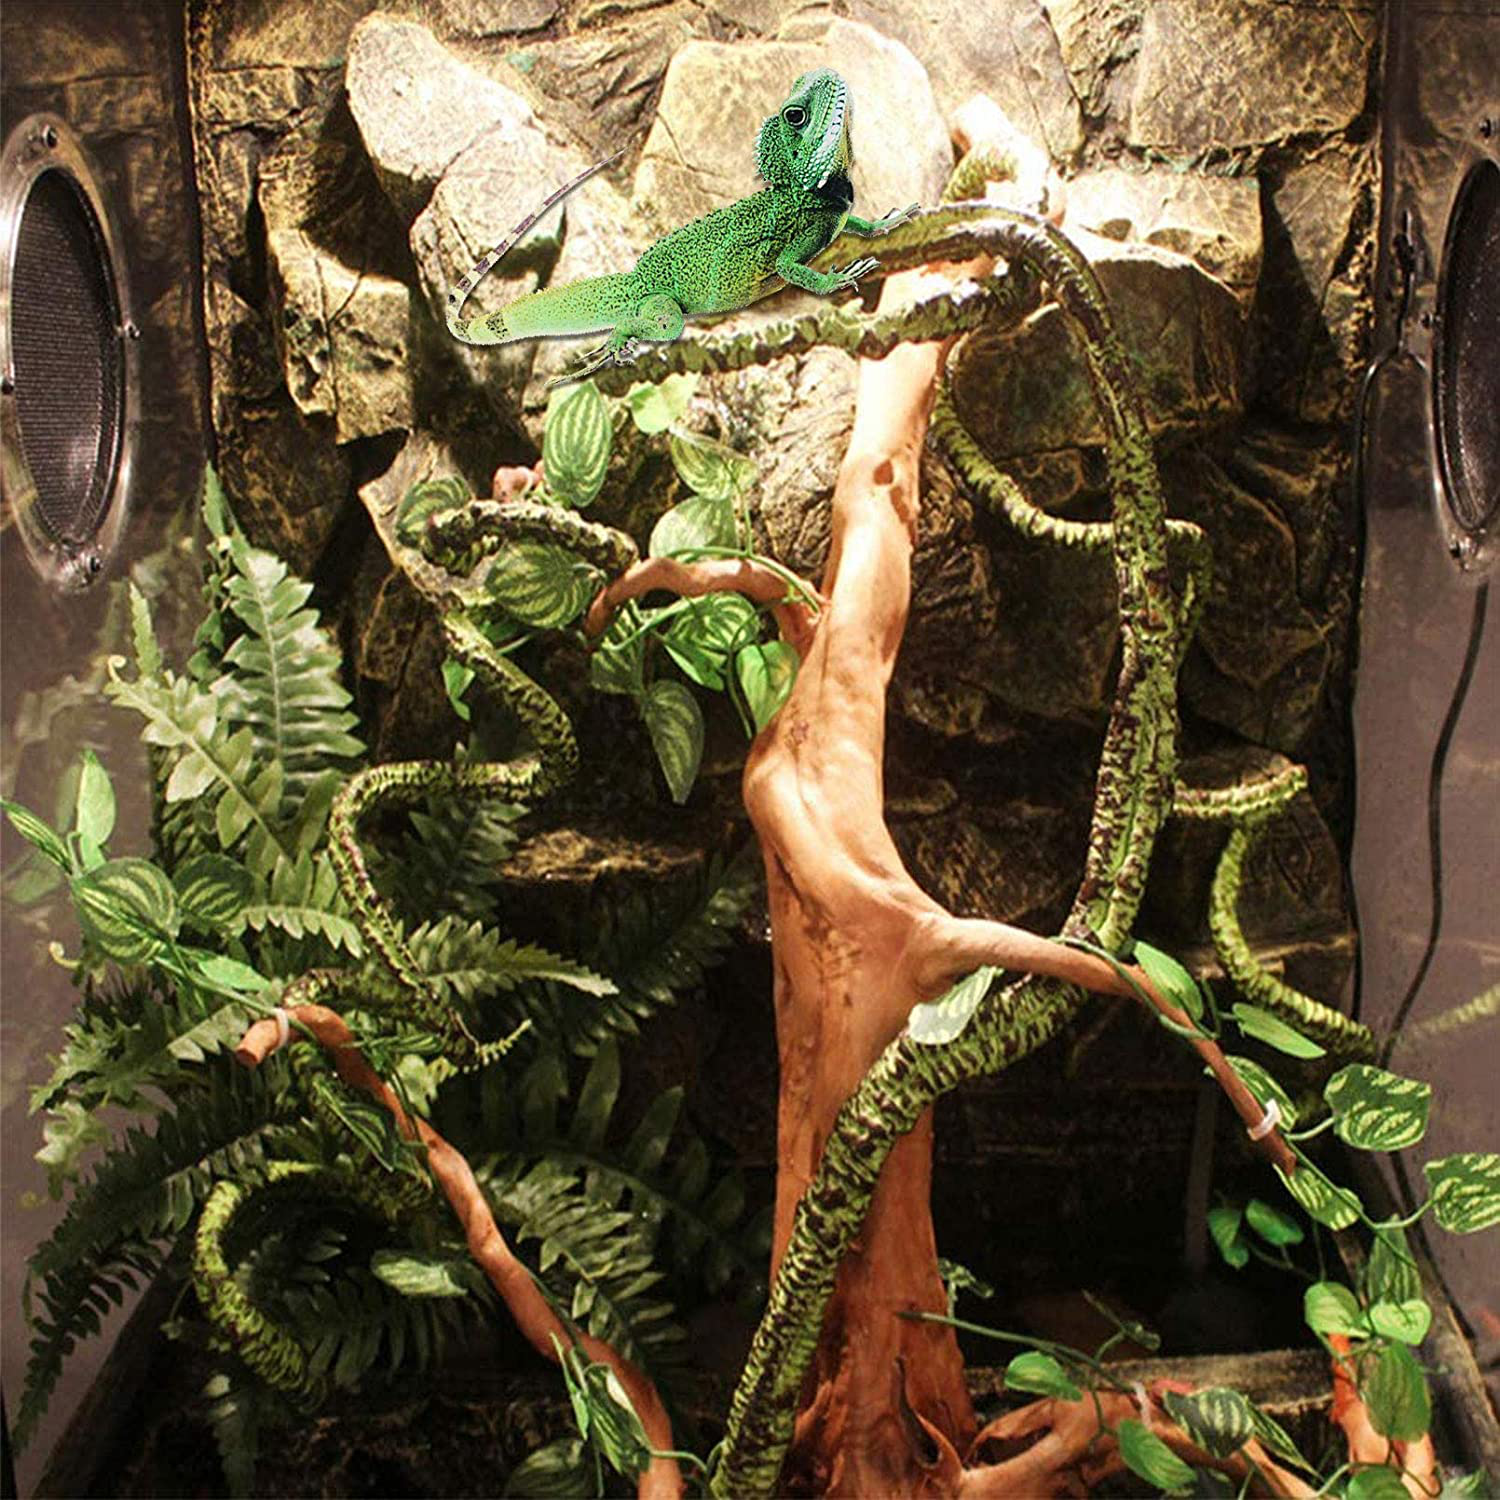 PINVNBY Bearded Dragon Habitat Decoration,Reptile Bendable Climber Vines Accessories,Lizard Natural Coconut Fiber Carpet Mat Coconut Shell Hut Chameleon Terrarium Supplies for Gecko,Tortoises(4 Pcs)